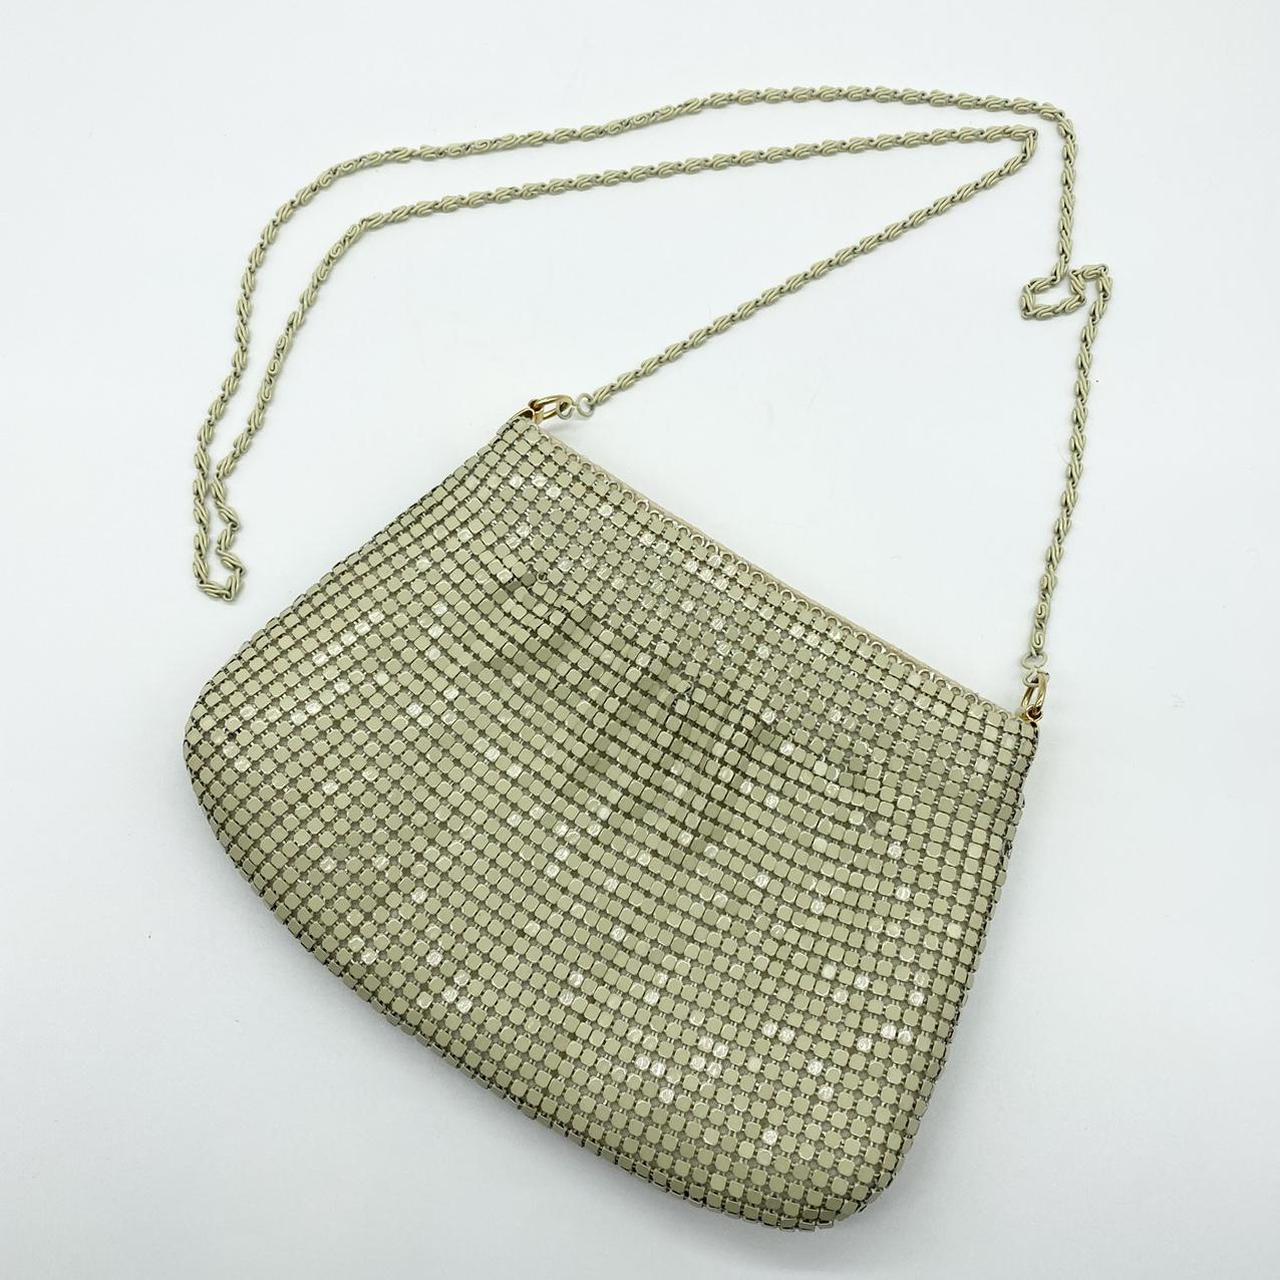 Product Image 3 - A cute vintage mesh bag